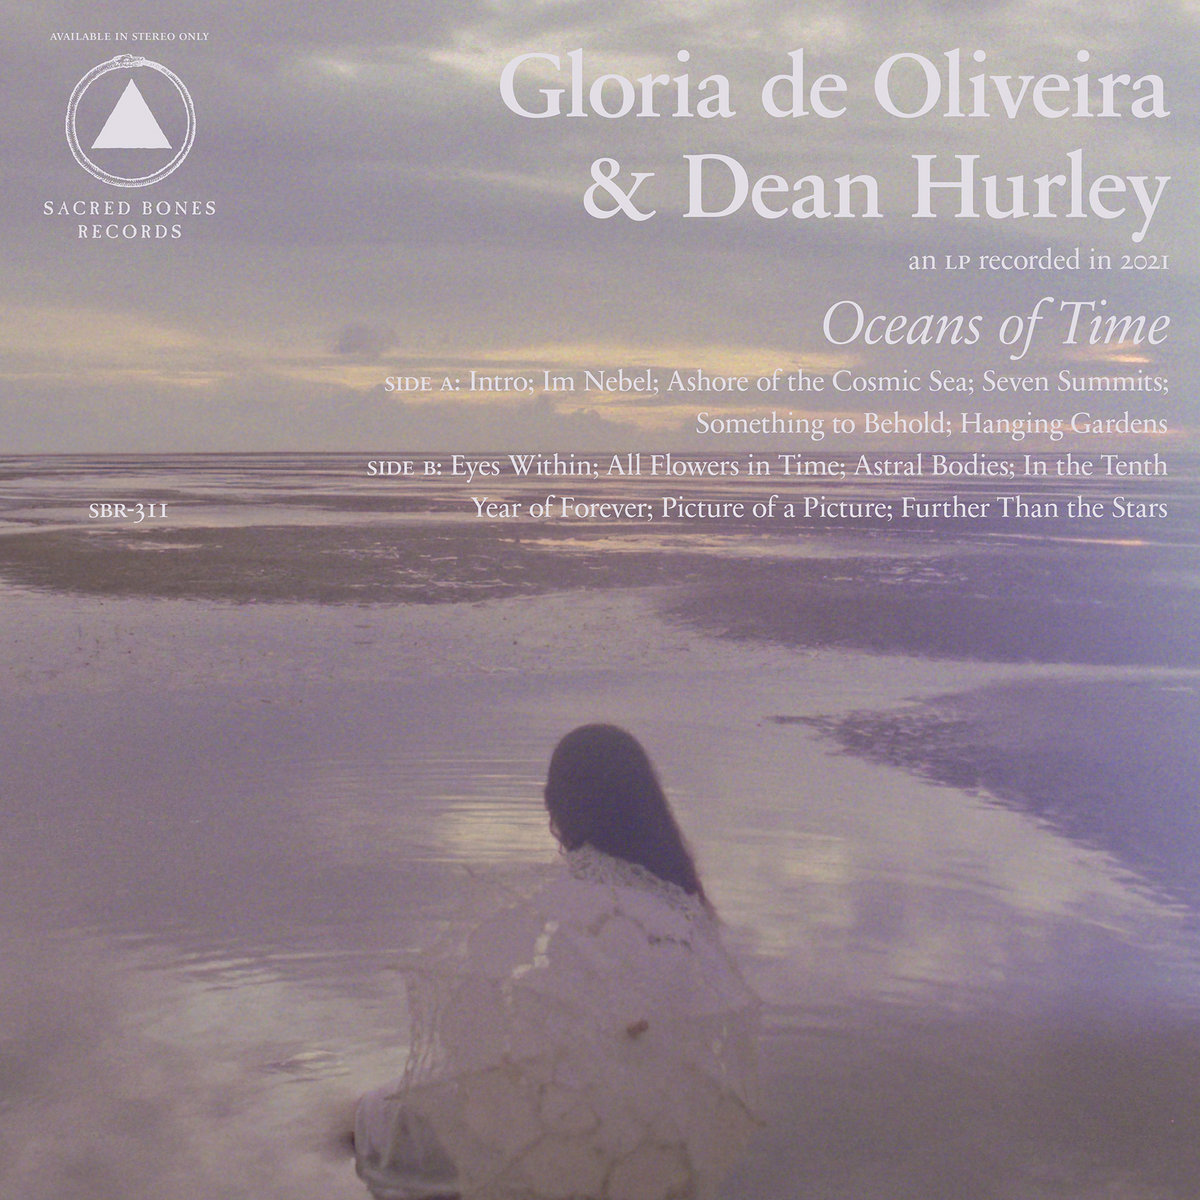 Gloria de Oliveira and Dean Hurley